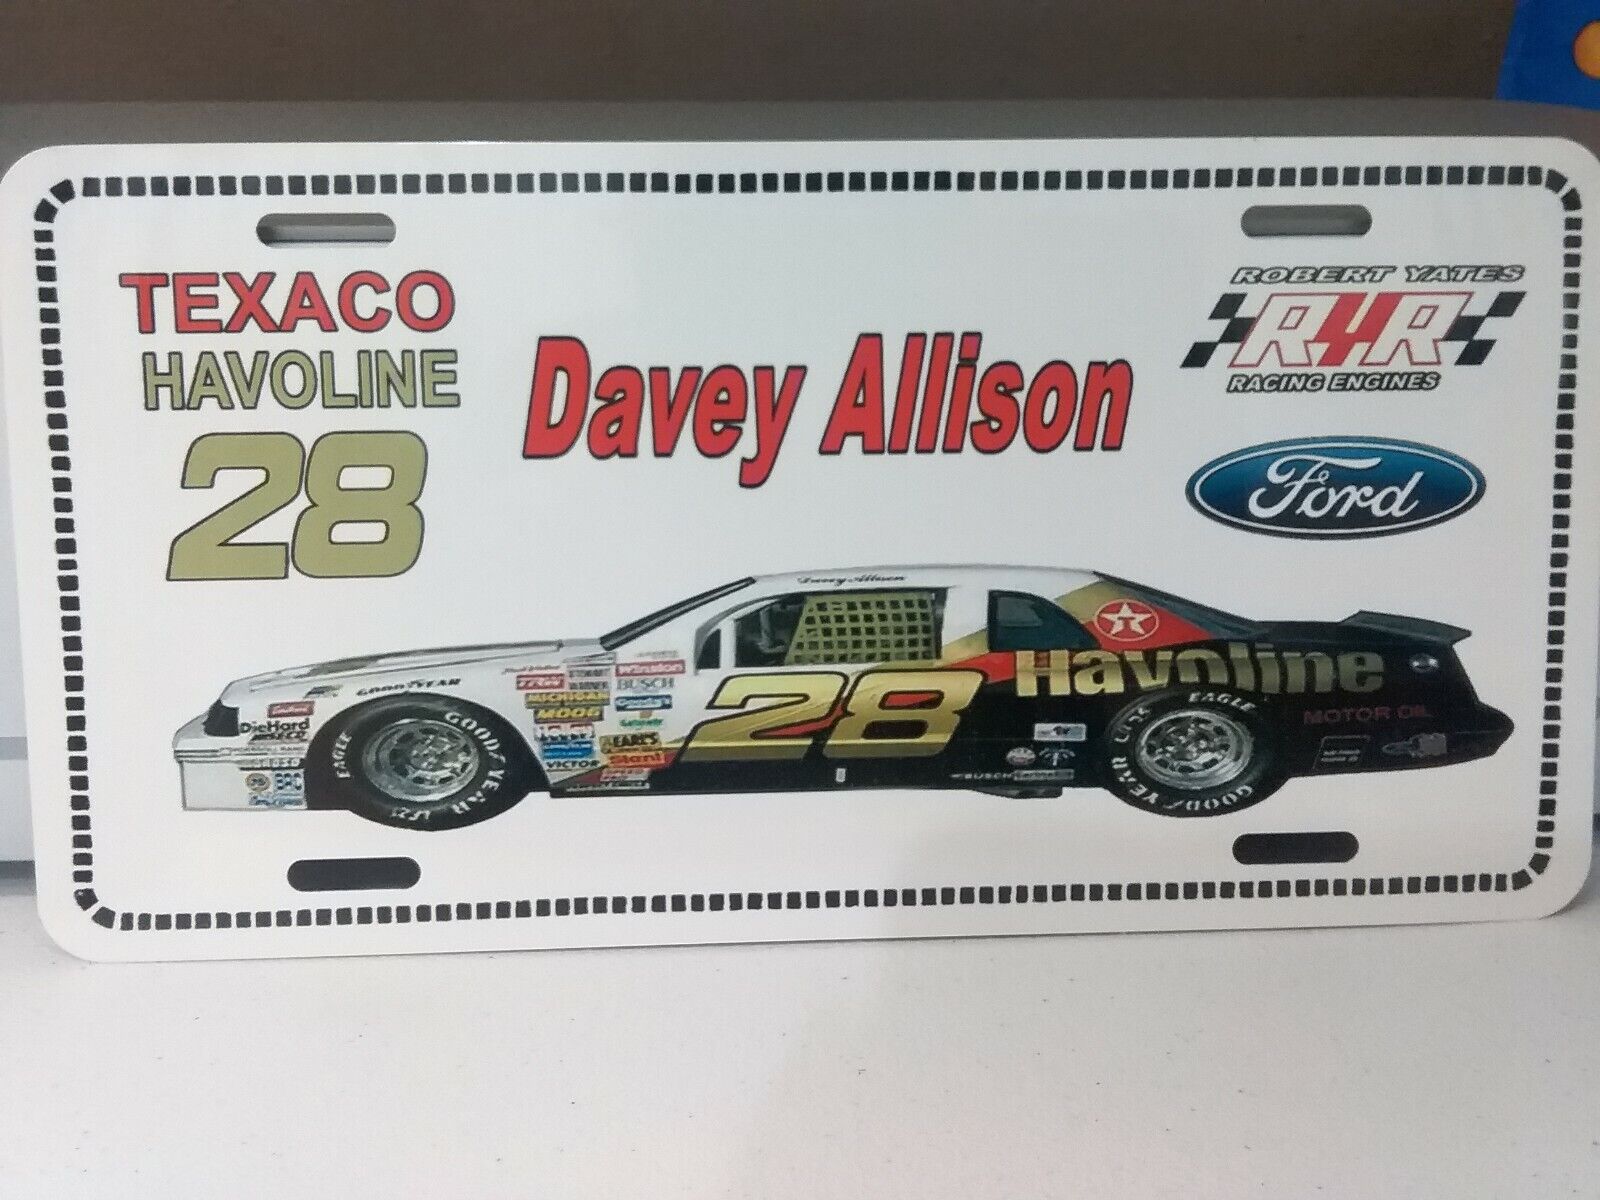 Vintage looking DAVEY ALLISON TEXACO Racing Team  -  28 License Plate  1980s 